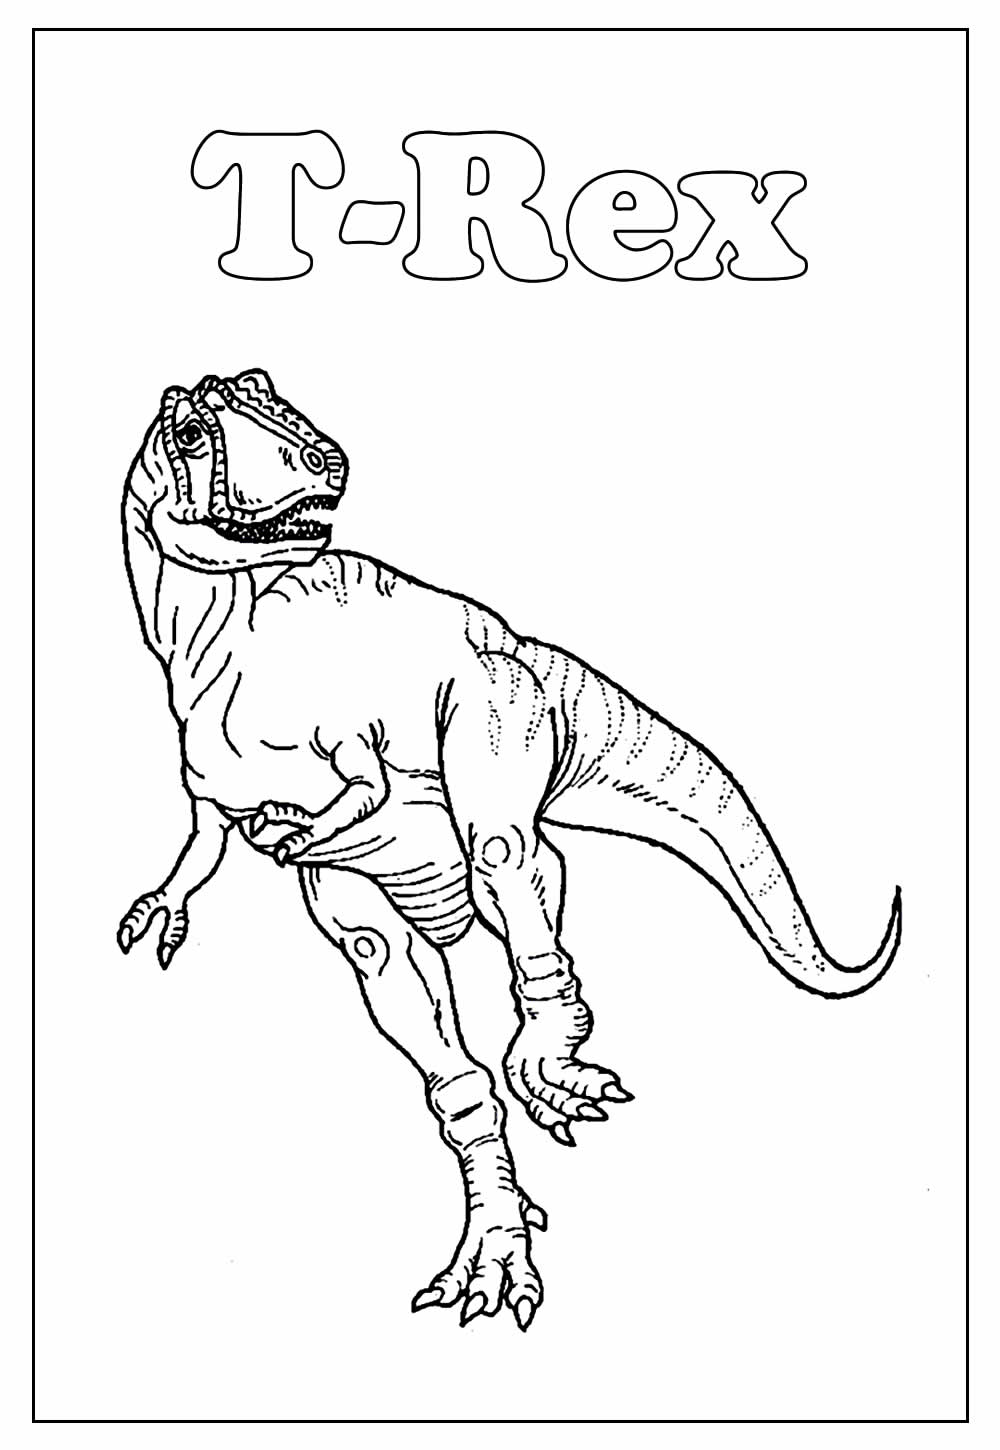 Desenho Educativo de T-Rex para colorir